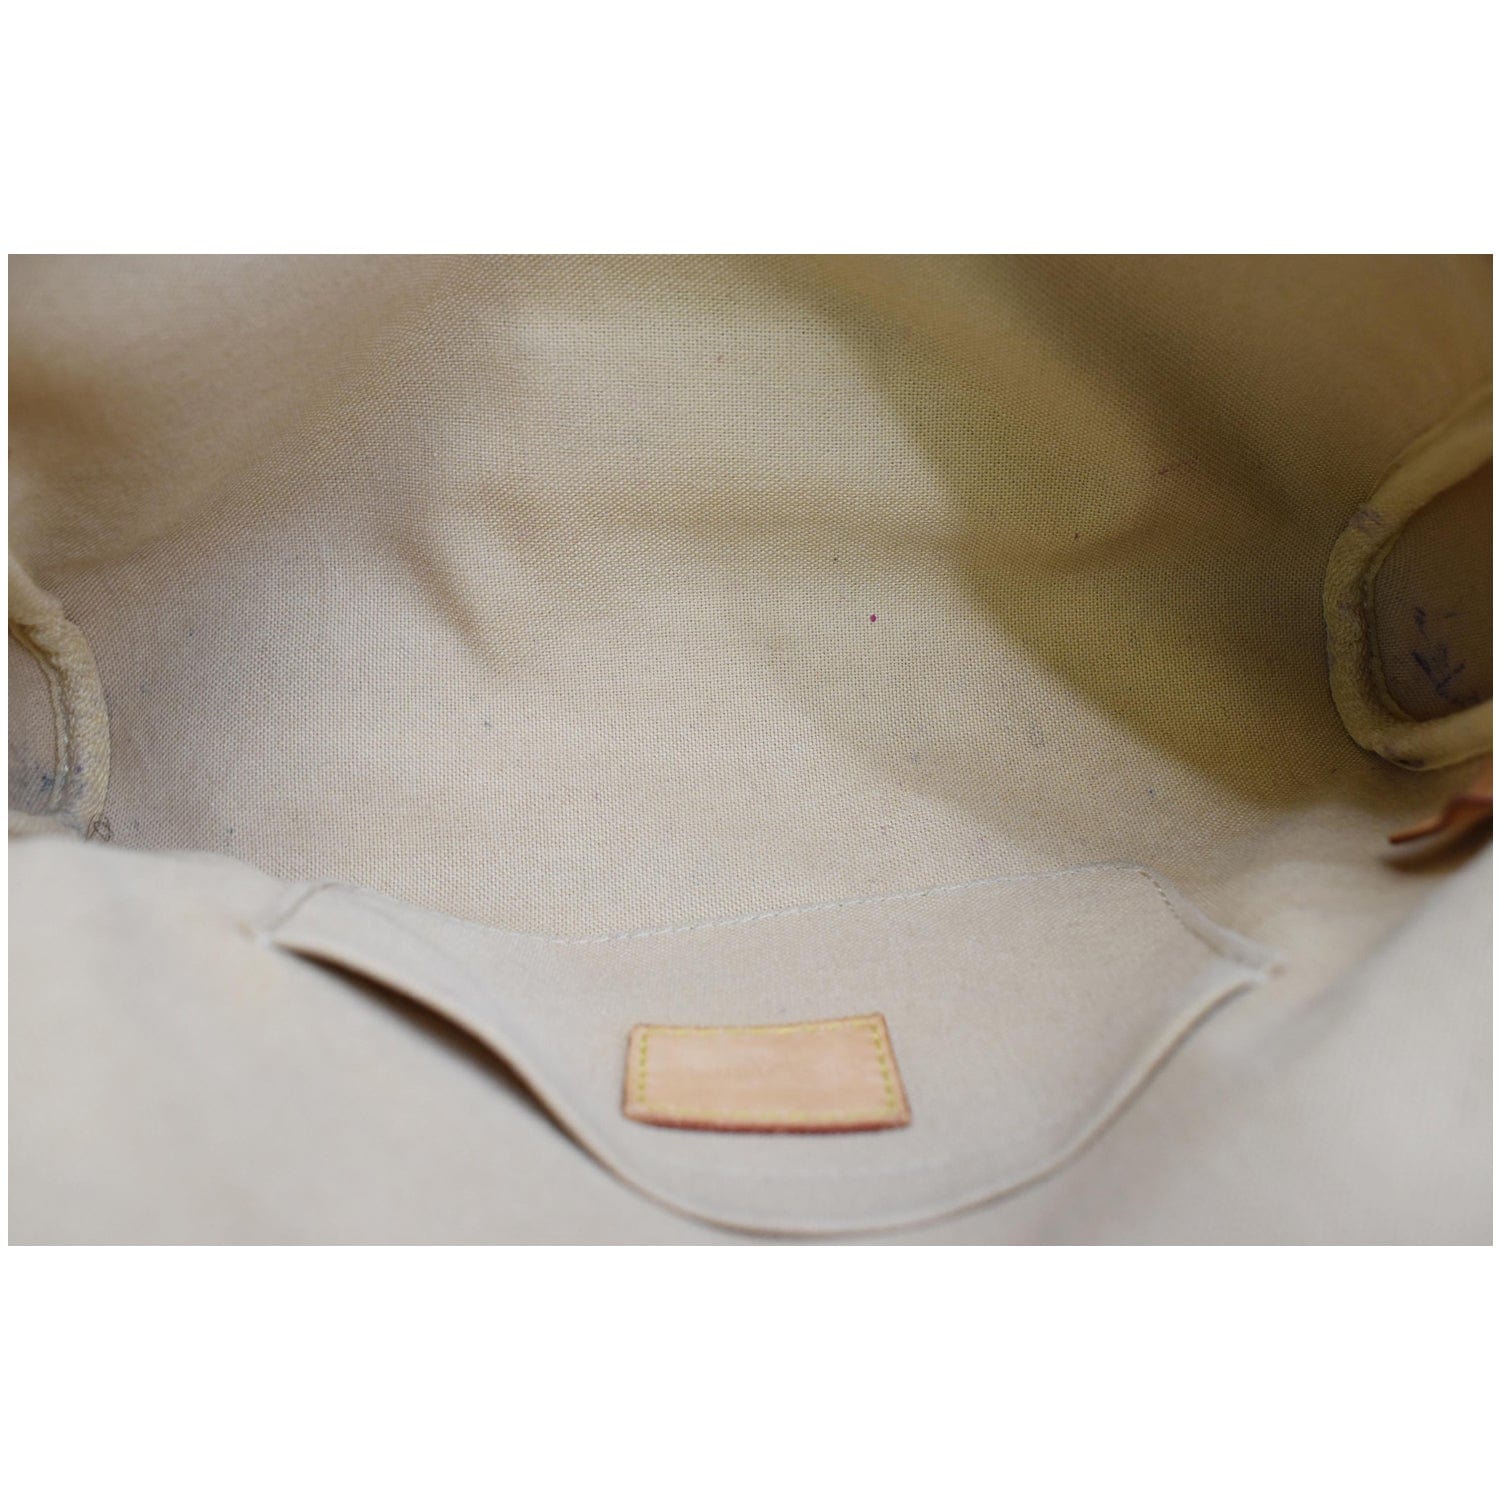 D' Analay Store on Instagram: “Correa blanca Louis Vuitton disponible en  @analaystore #analaystore Size 46/115 #correa #louisvuitt…